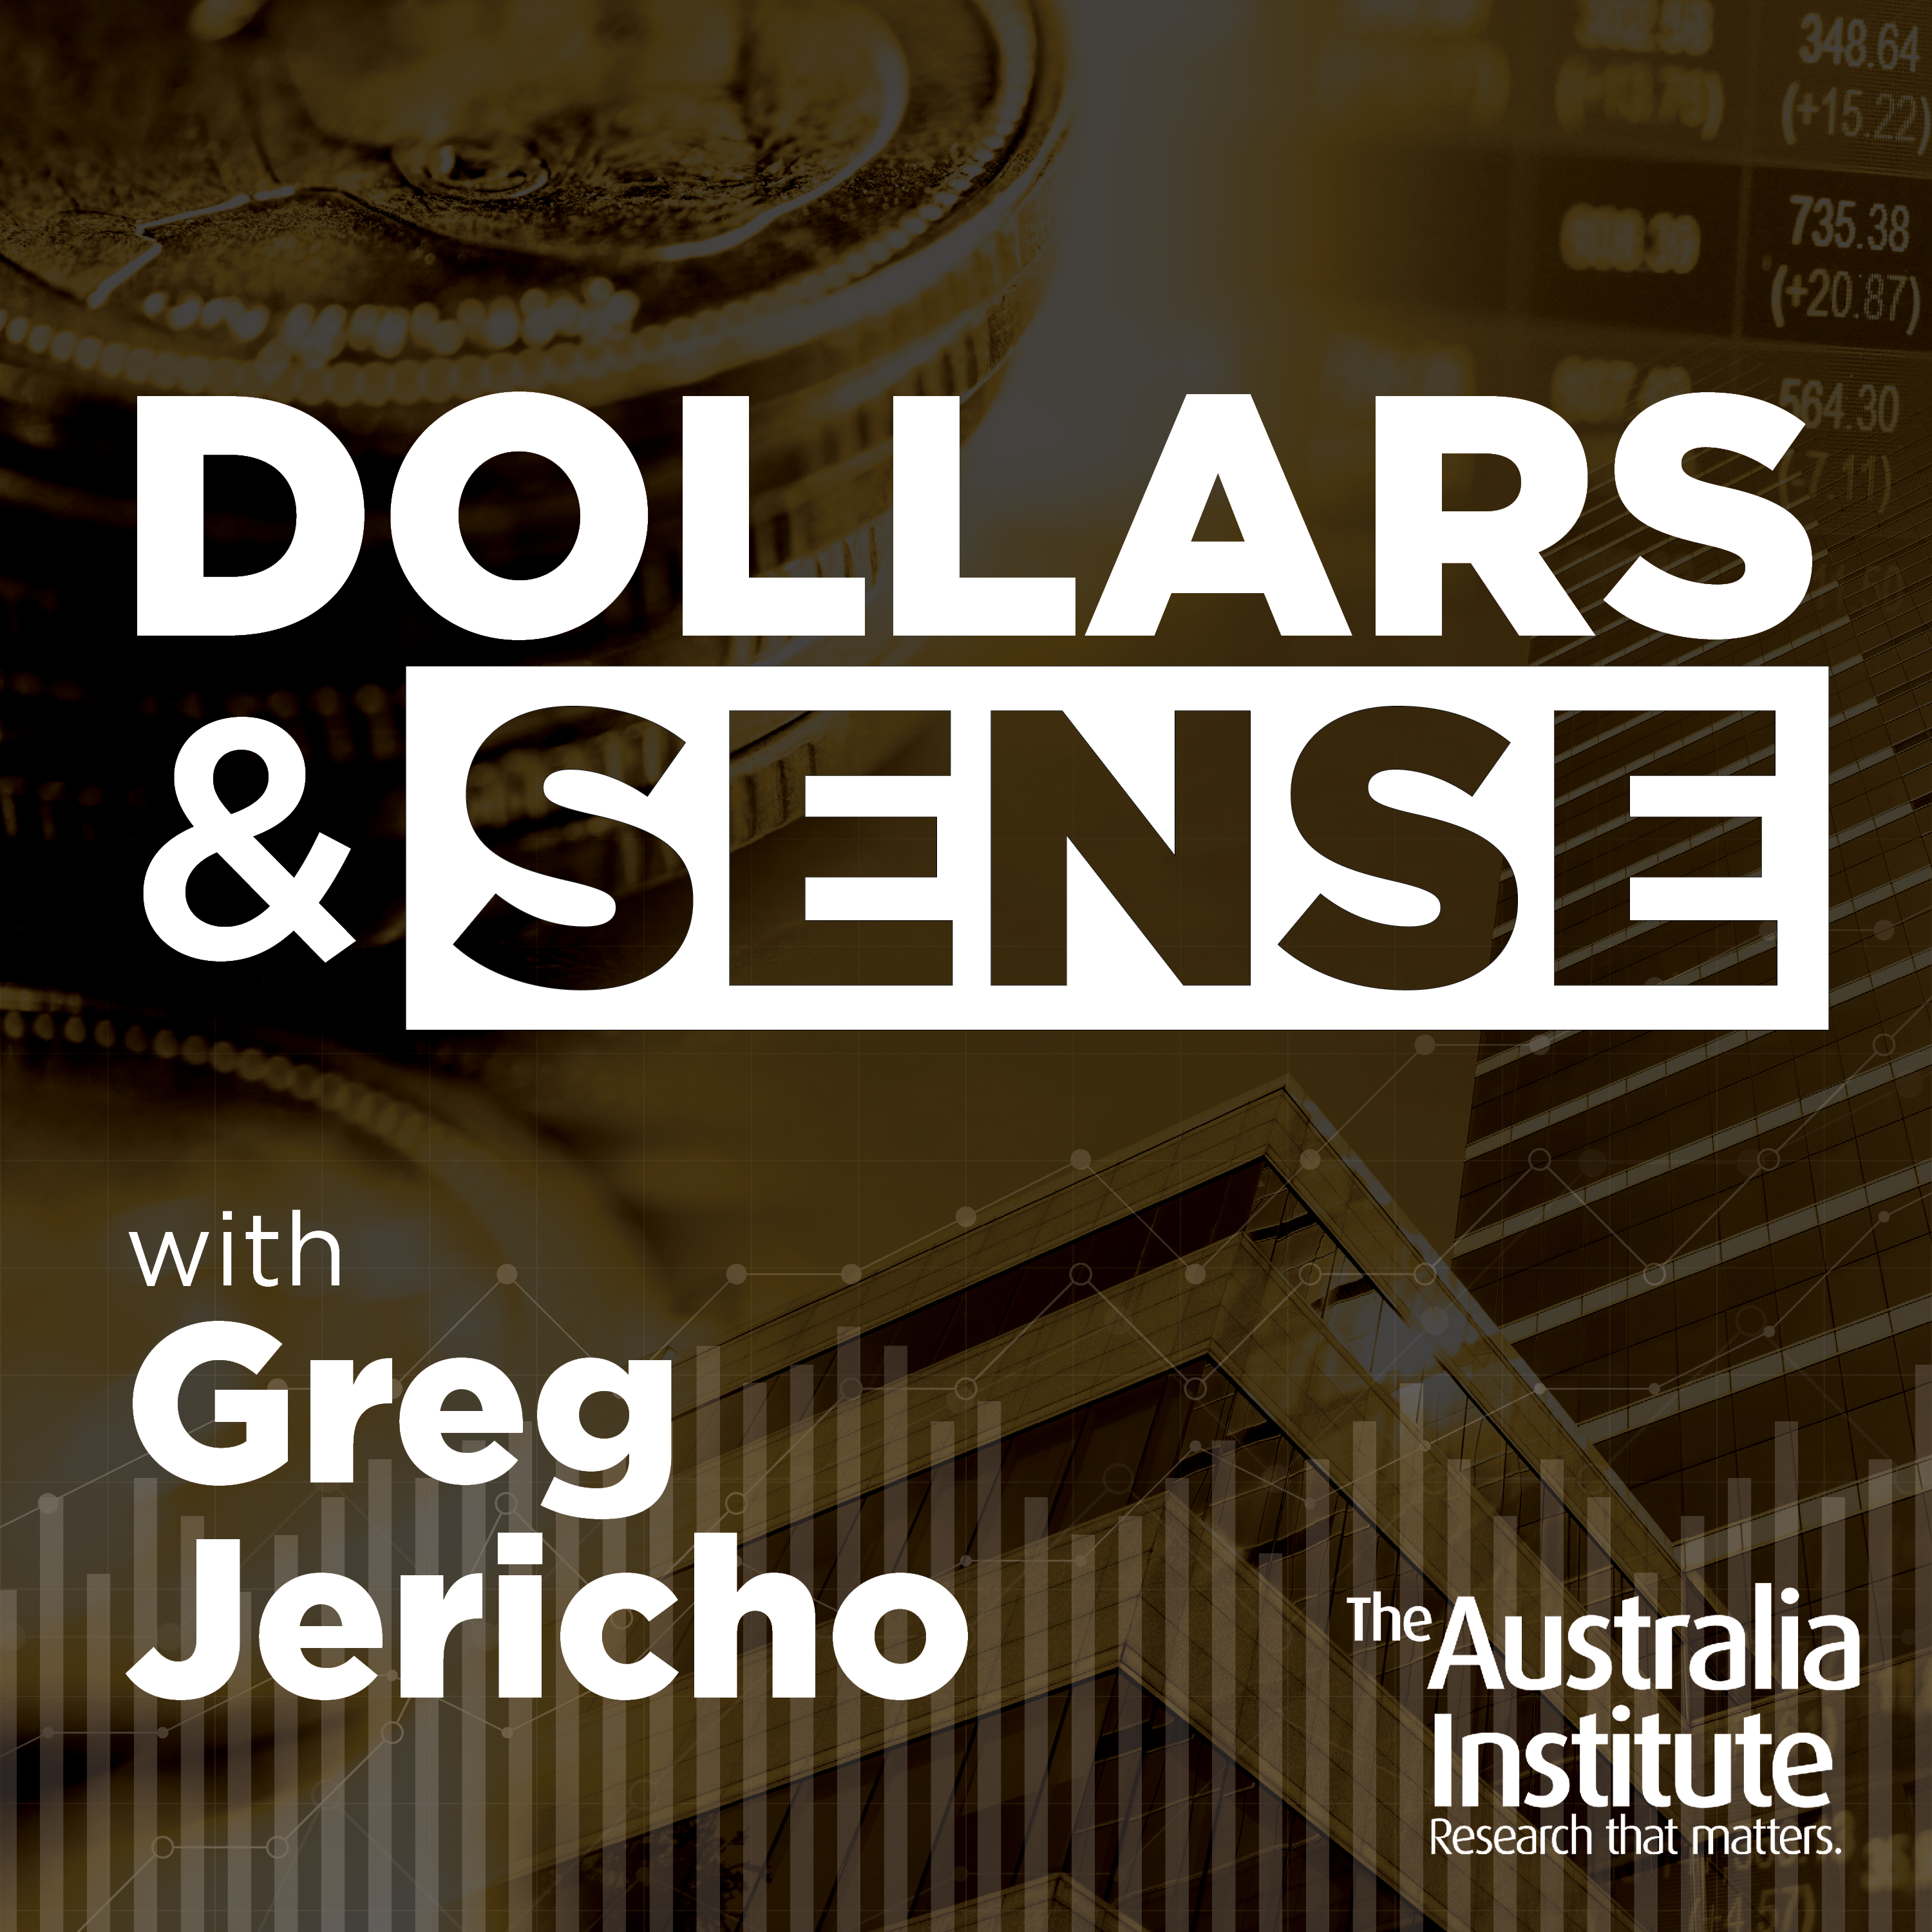 Introducing Dollars & Sense with Greg Jericho